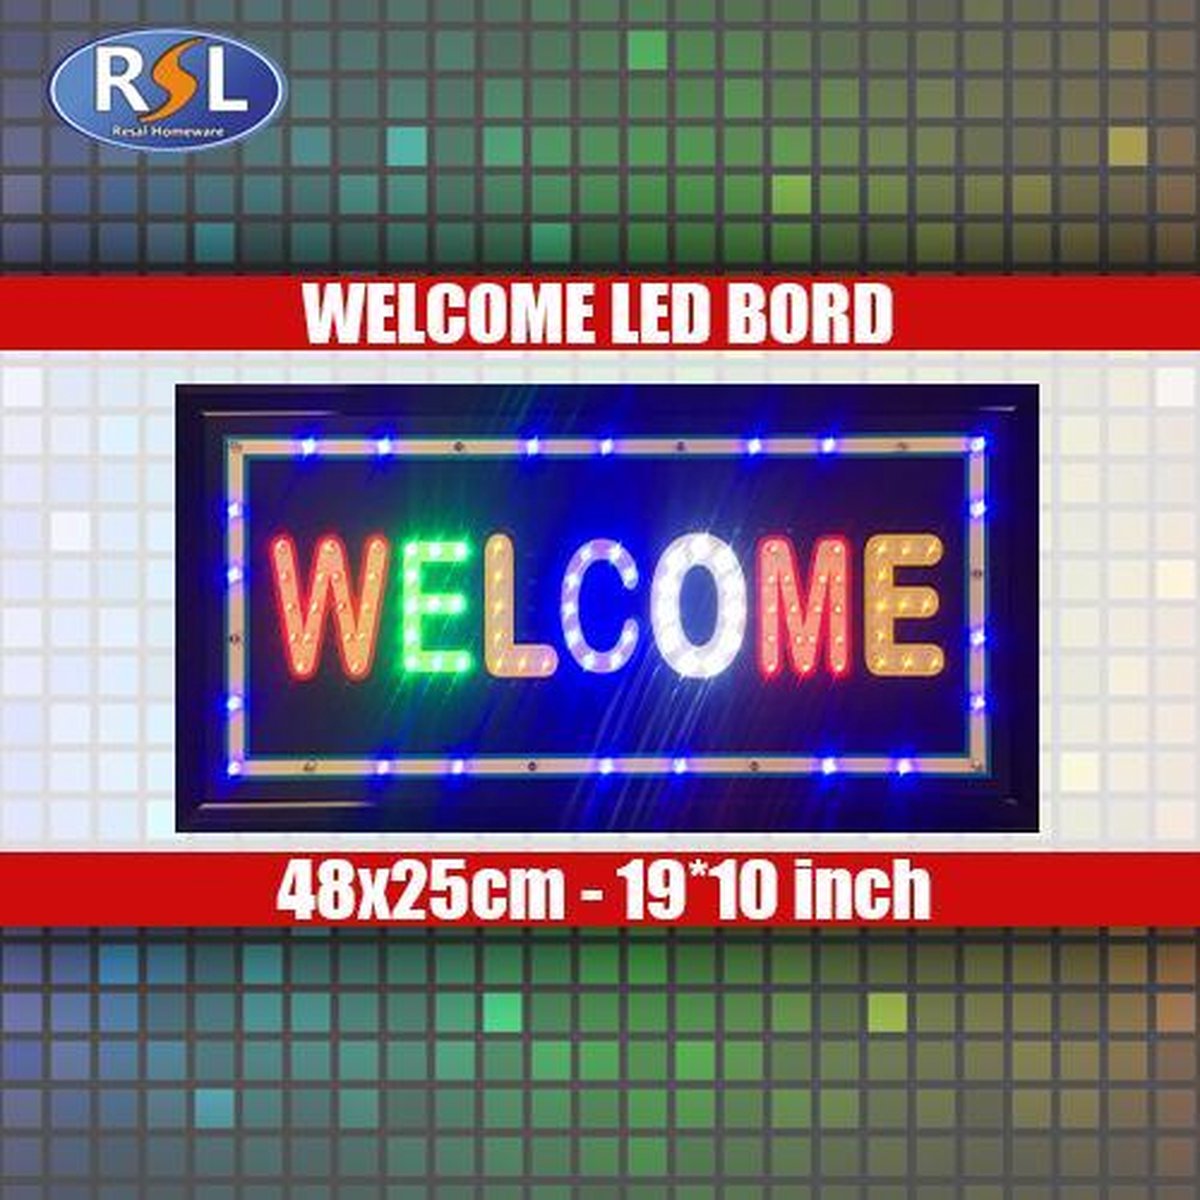 Afbeelding van product RSL Homeware  Resal Homeware RGB/LED Welcome Bord 48x25cm - Zwart 8295